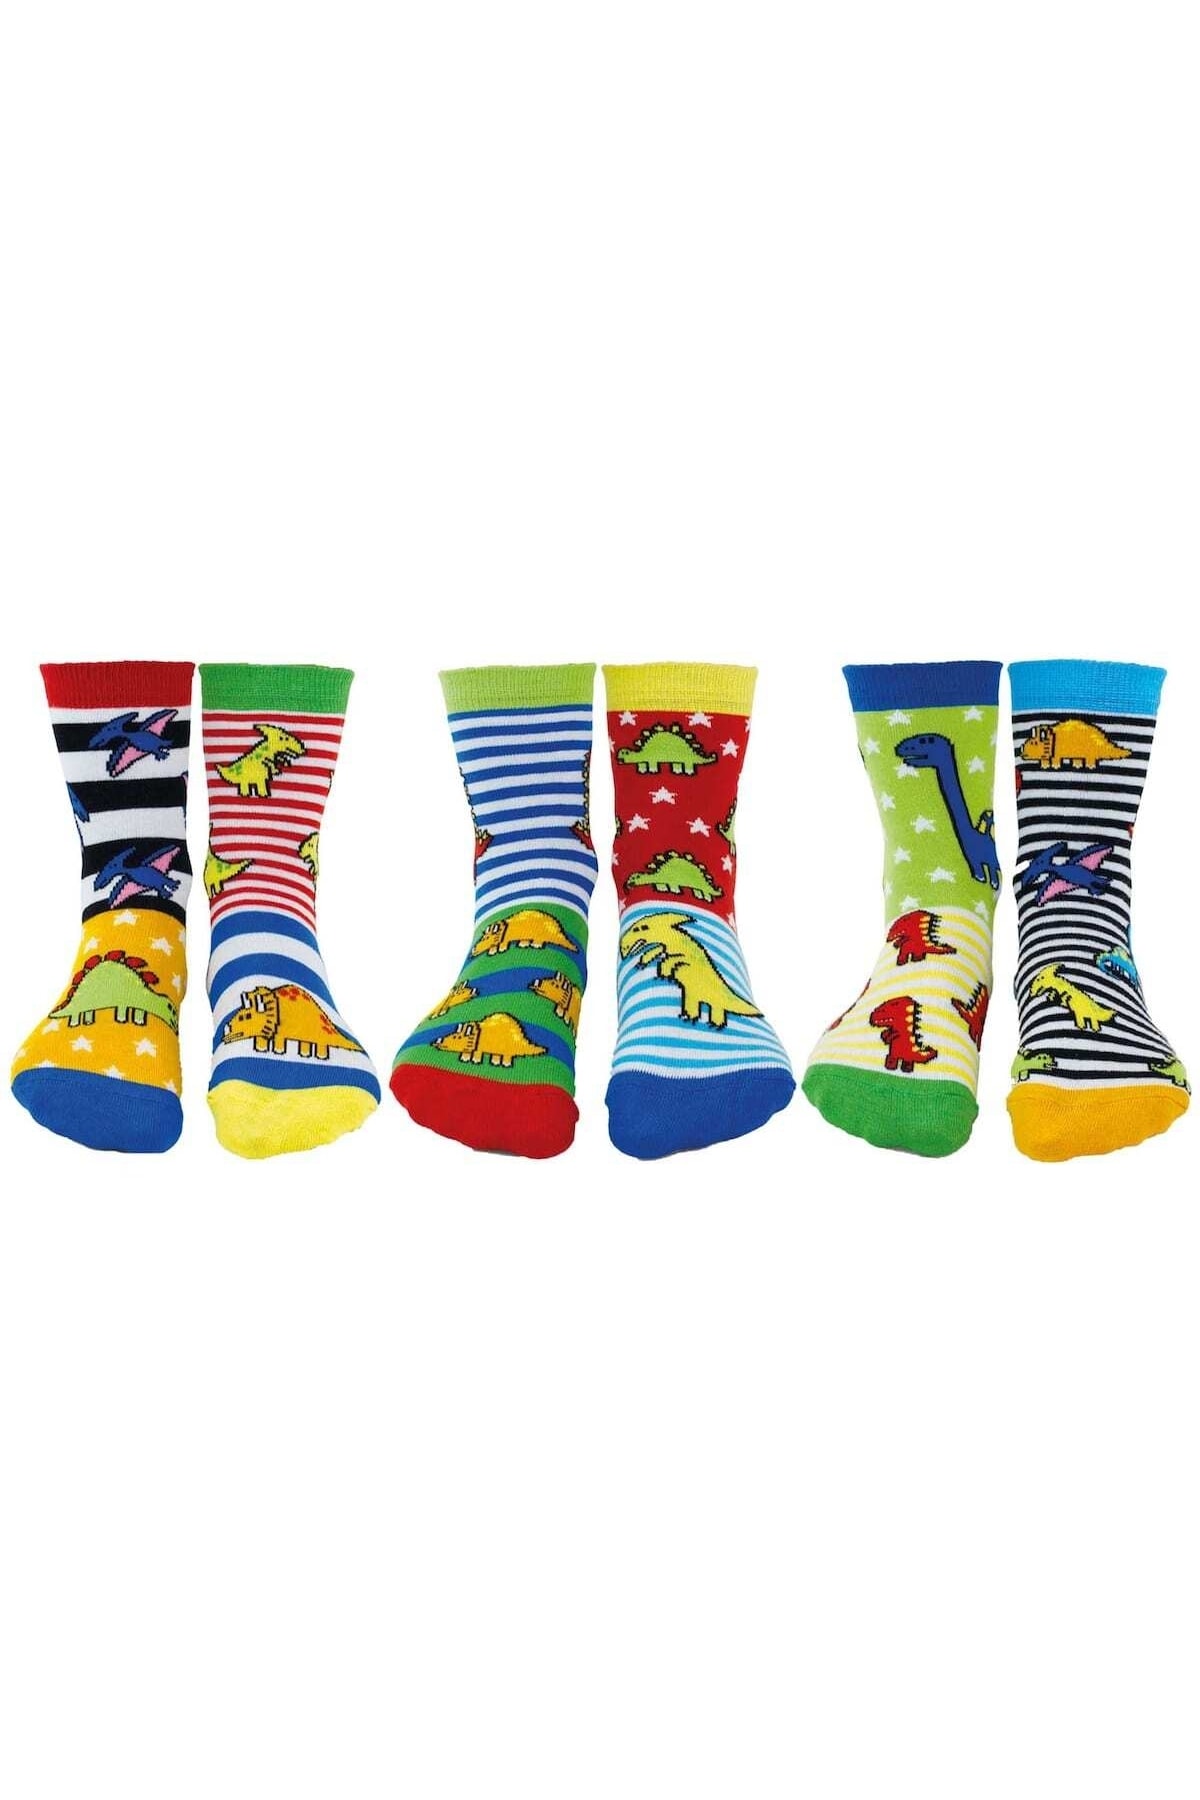 United Oddsocks Socken Mehrfarbig 1 Stück